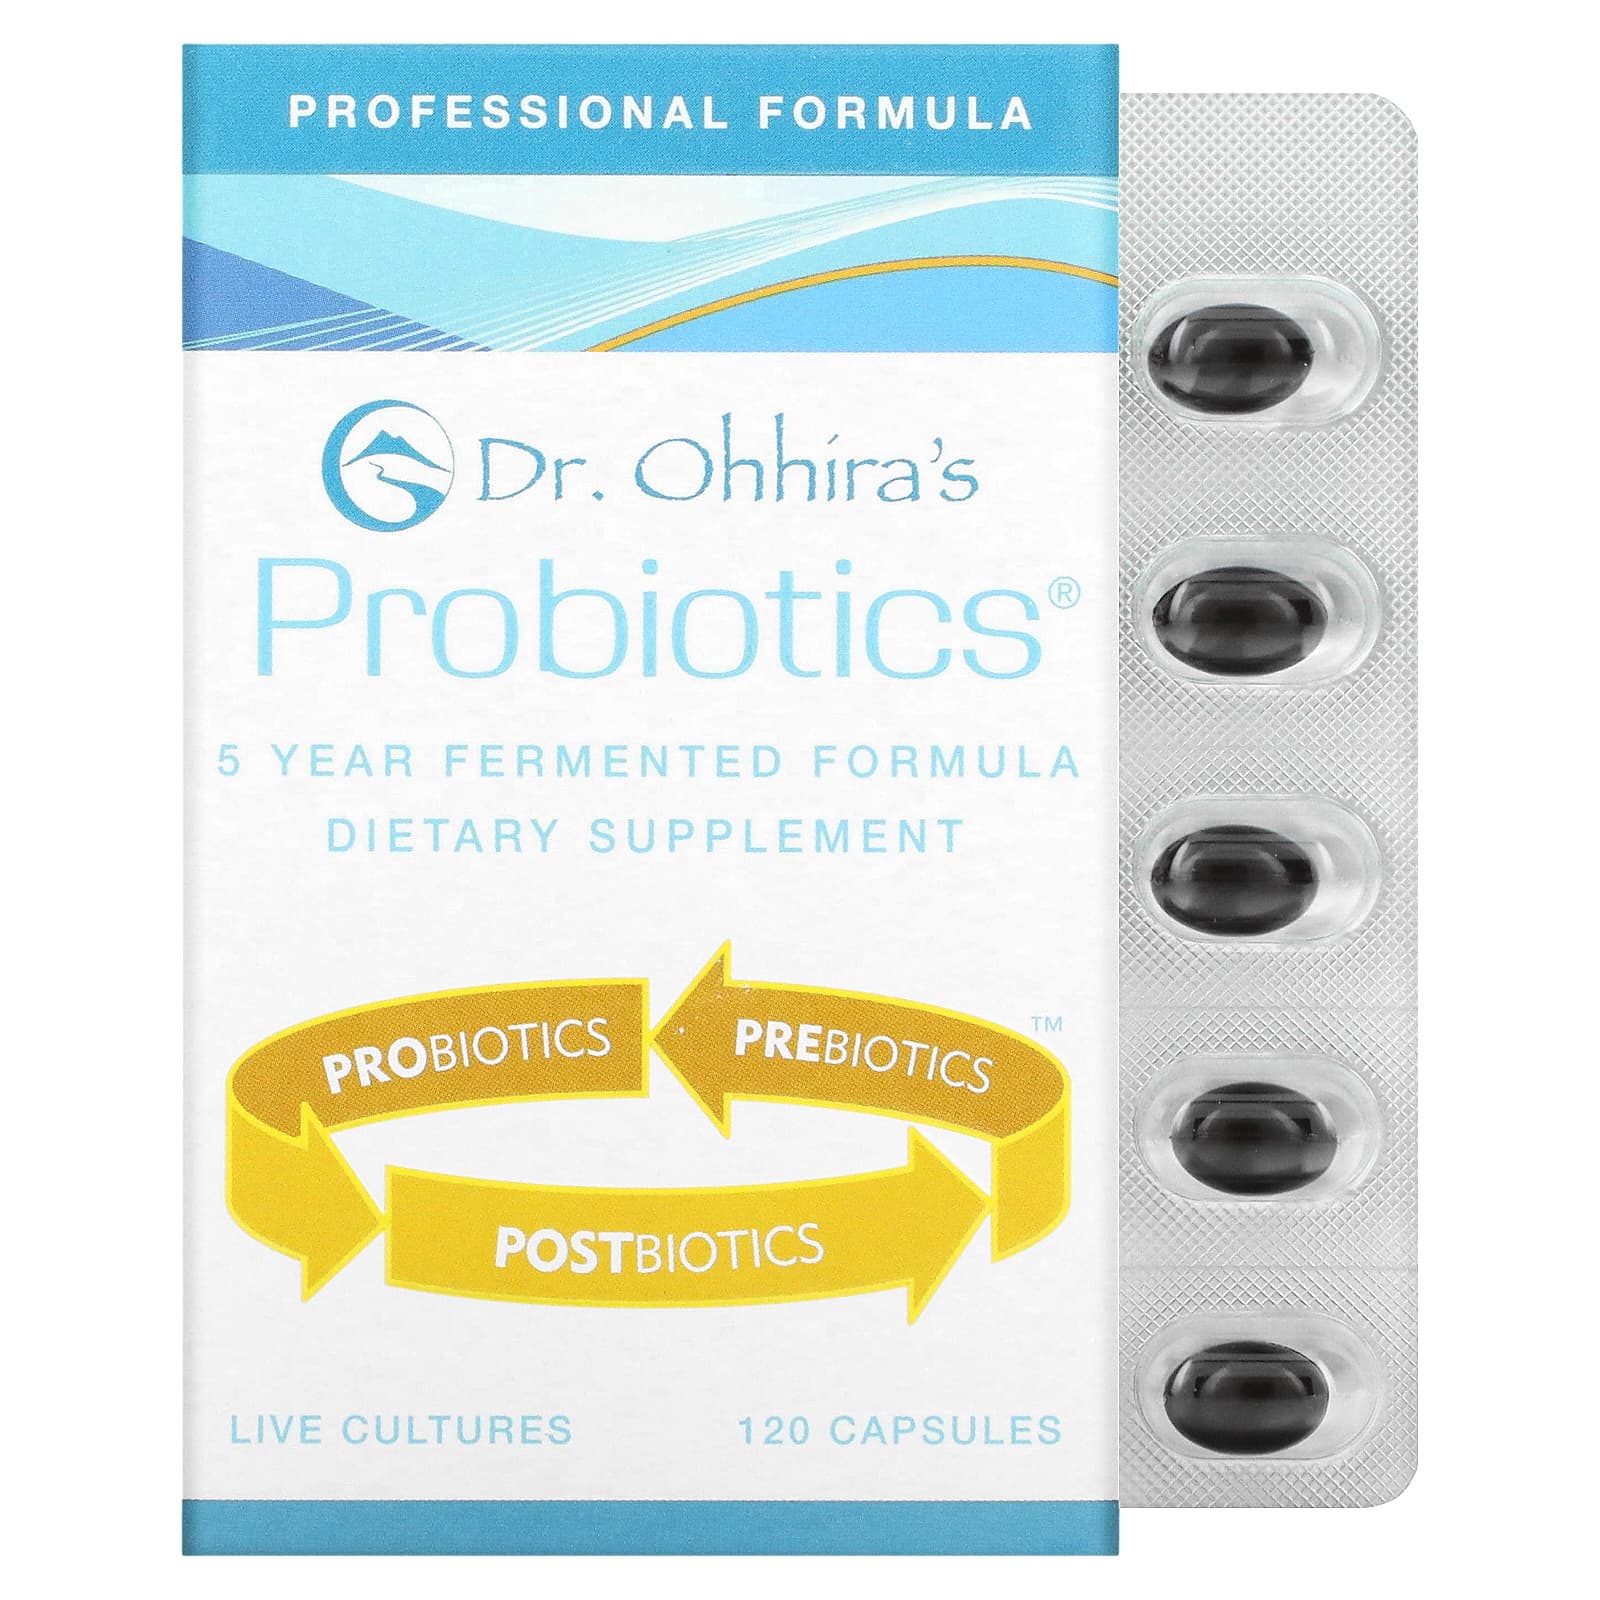 Dr. Ohhira's Essential Formulas Inc. Professional Formula Probiotics 120 капсул